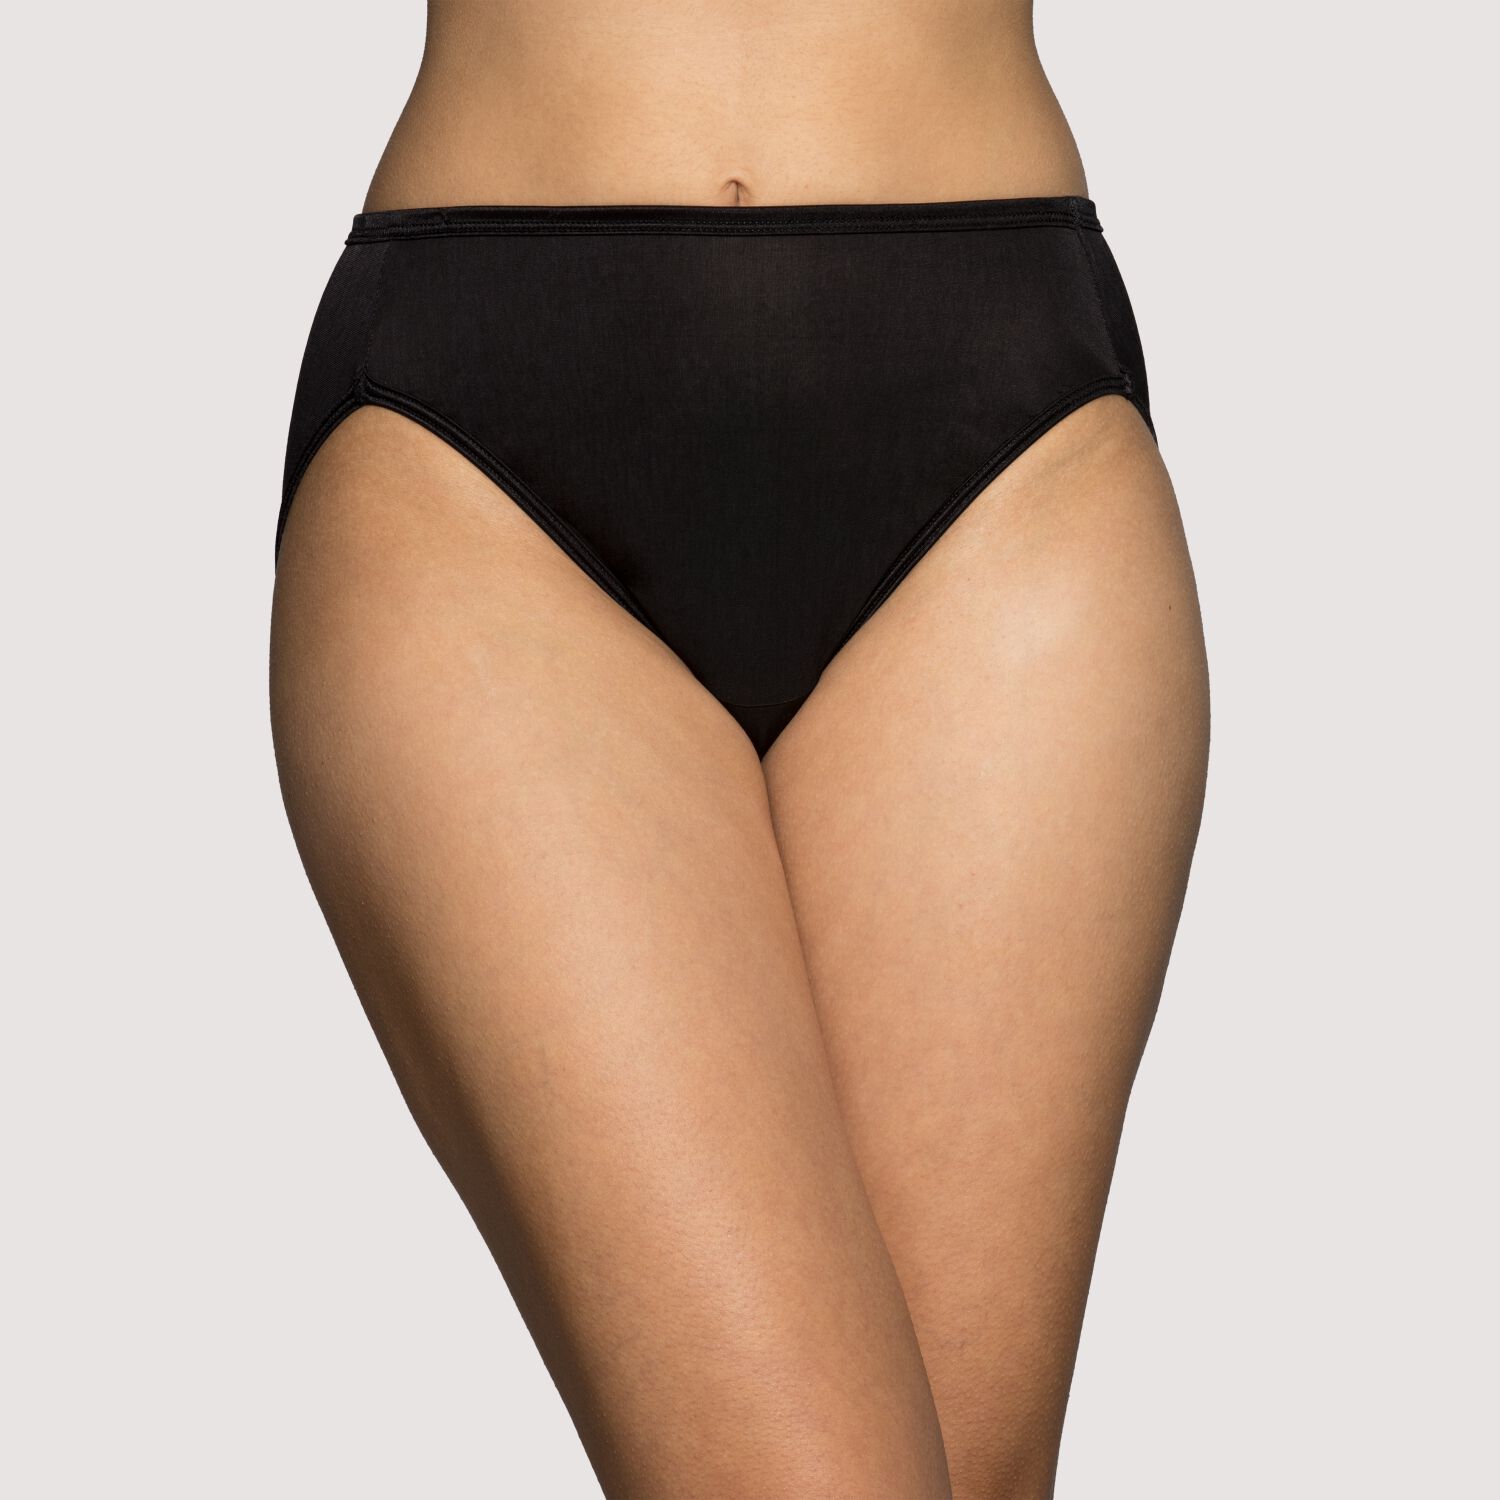 Vanity Fair Underglows PETTILEG Panty Nylon Slip Shorts Large - $30 - From W